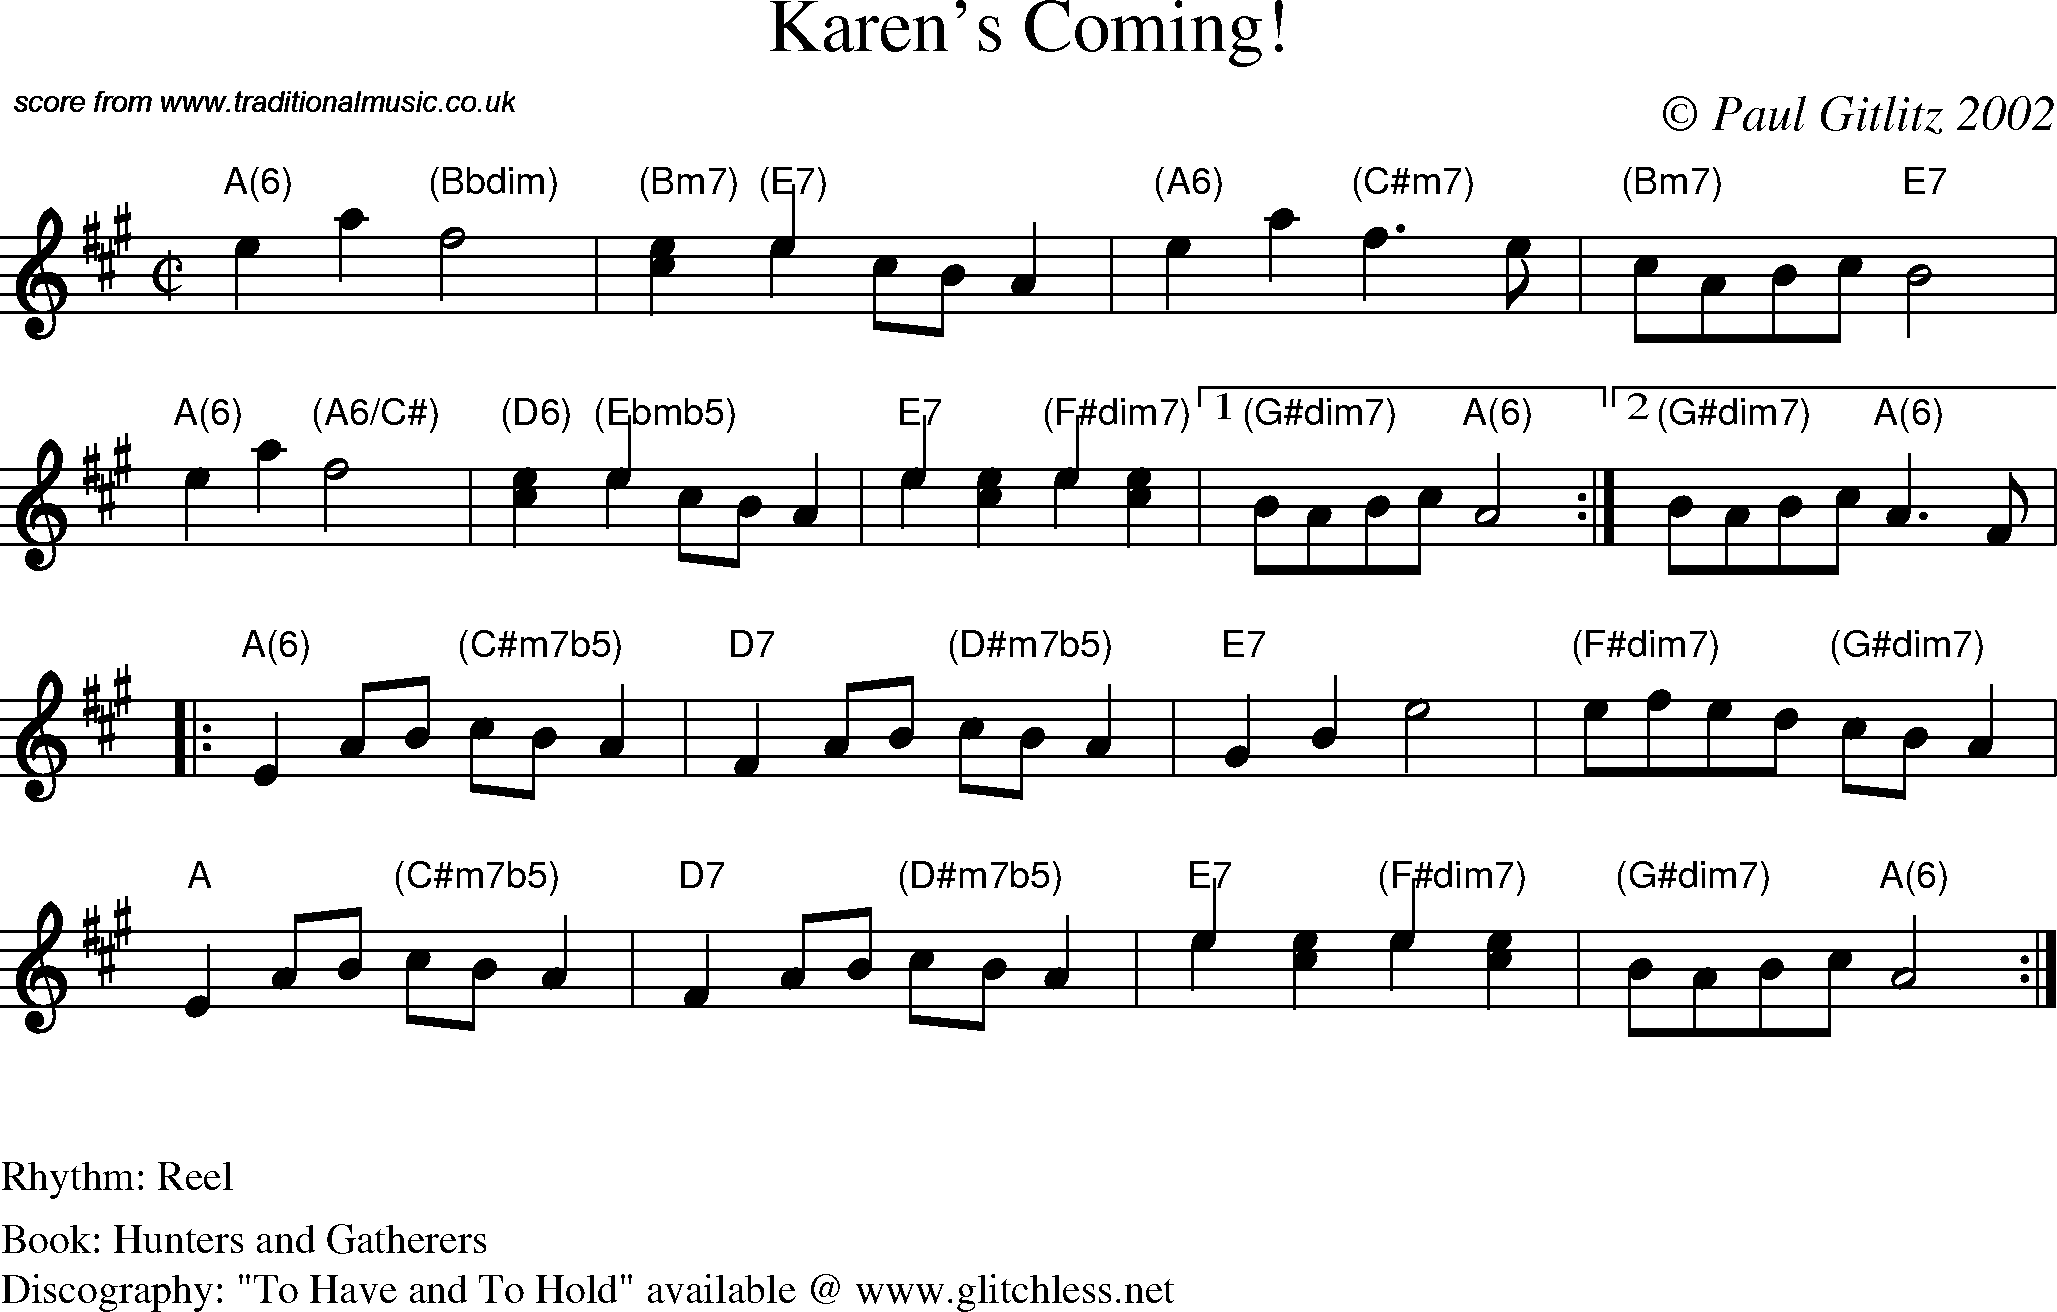 Sheet Music Score for Reel - Karen's Coming!